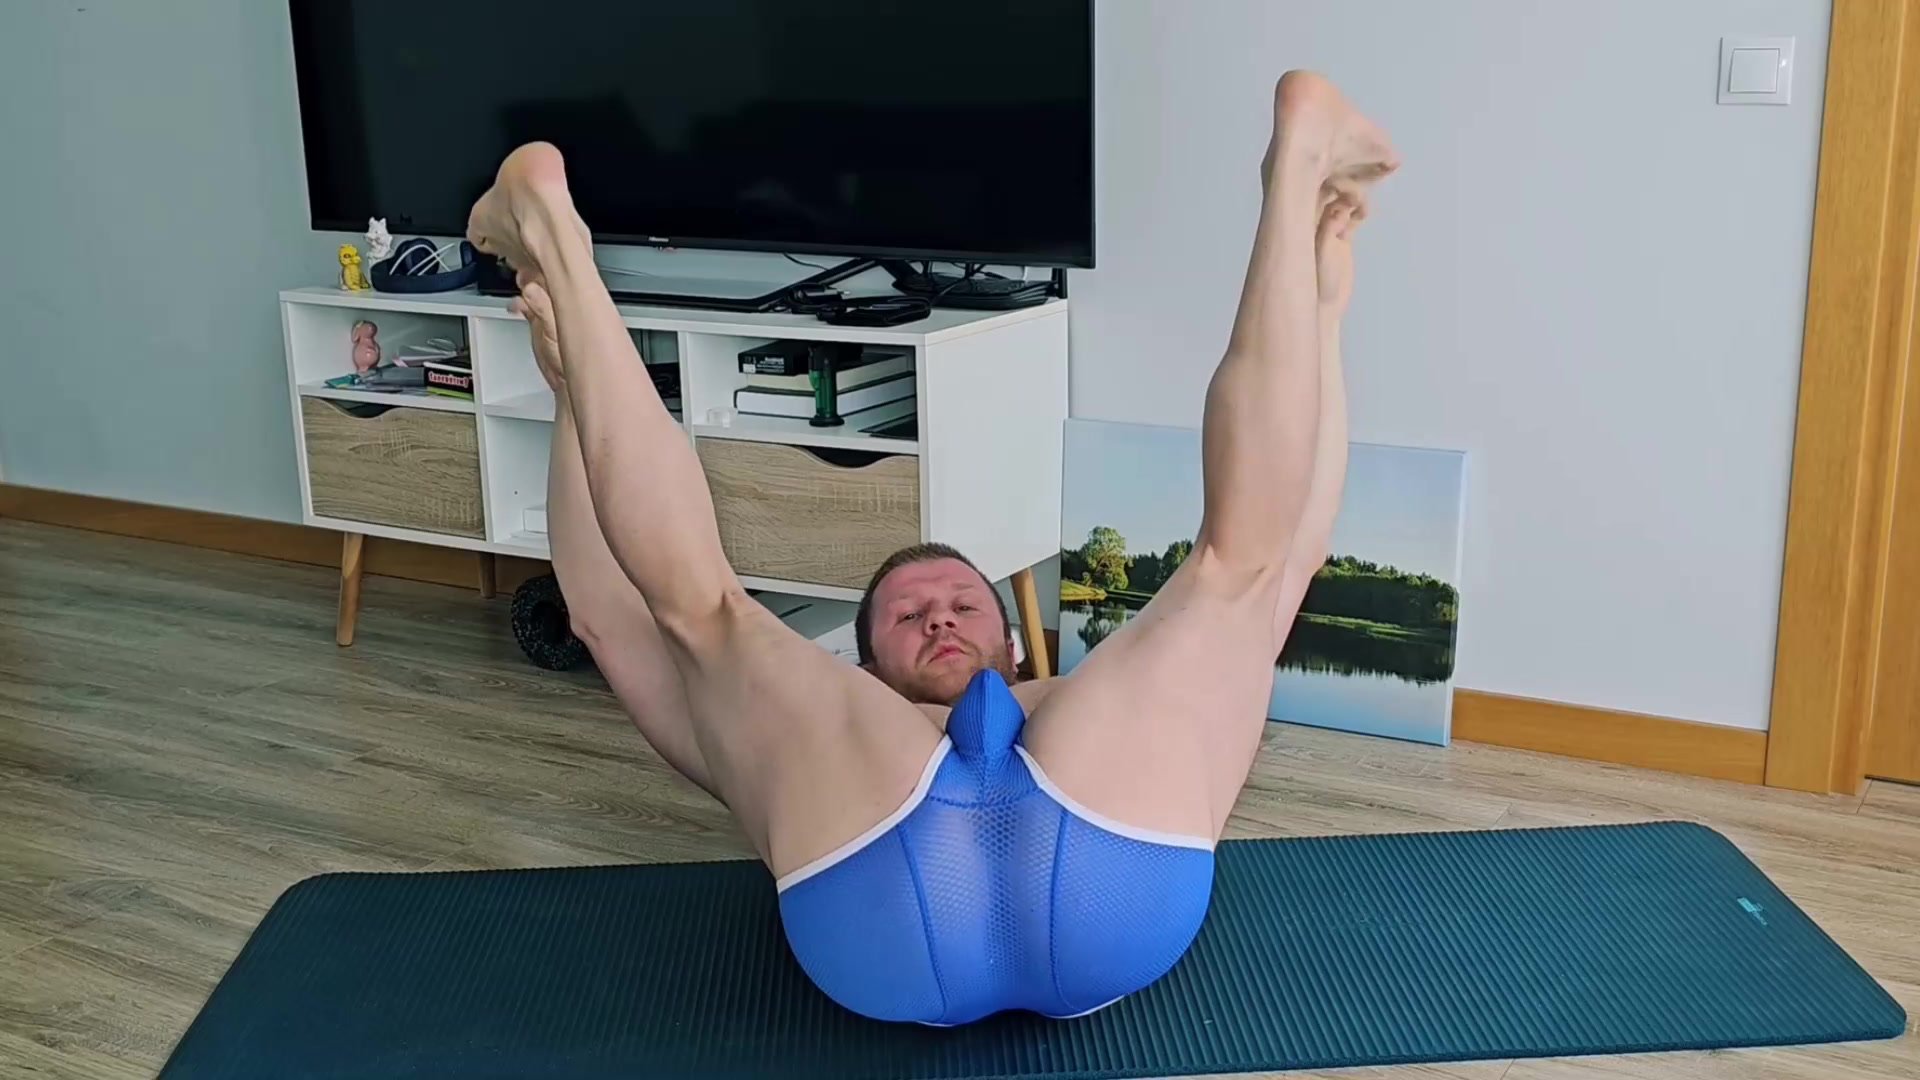 Man doing yoga shows his hole through sheer underwear